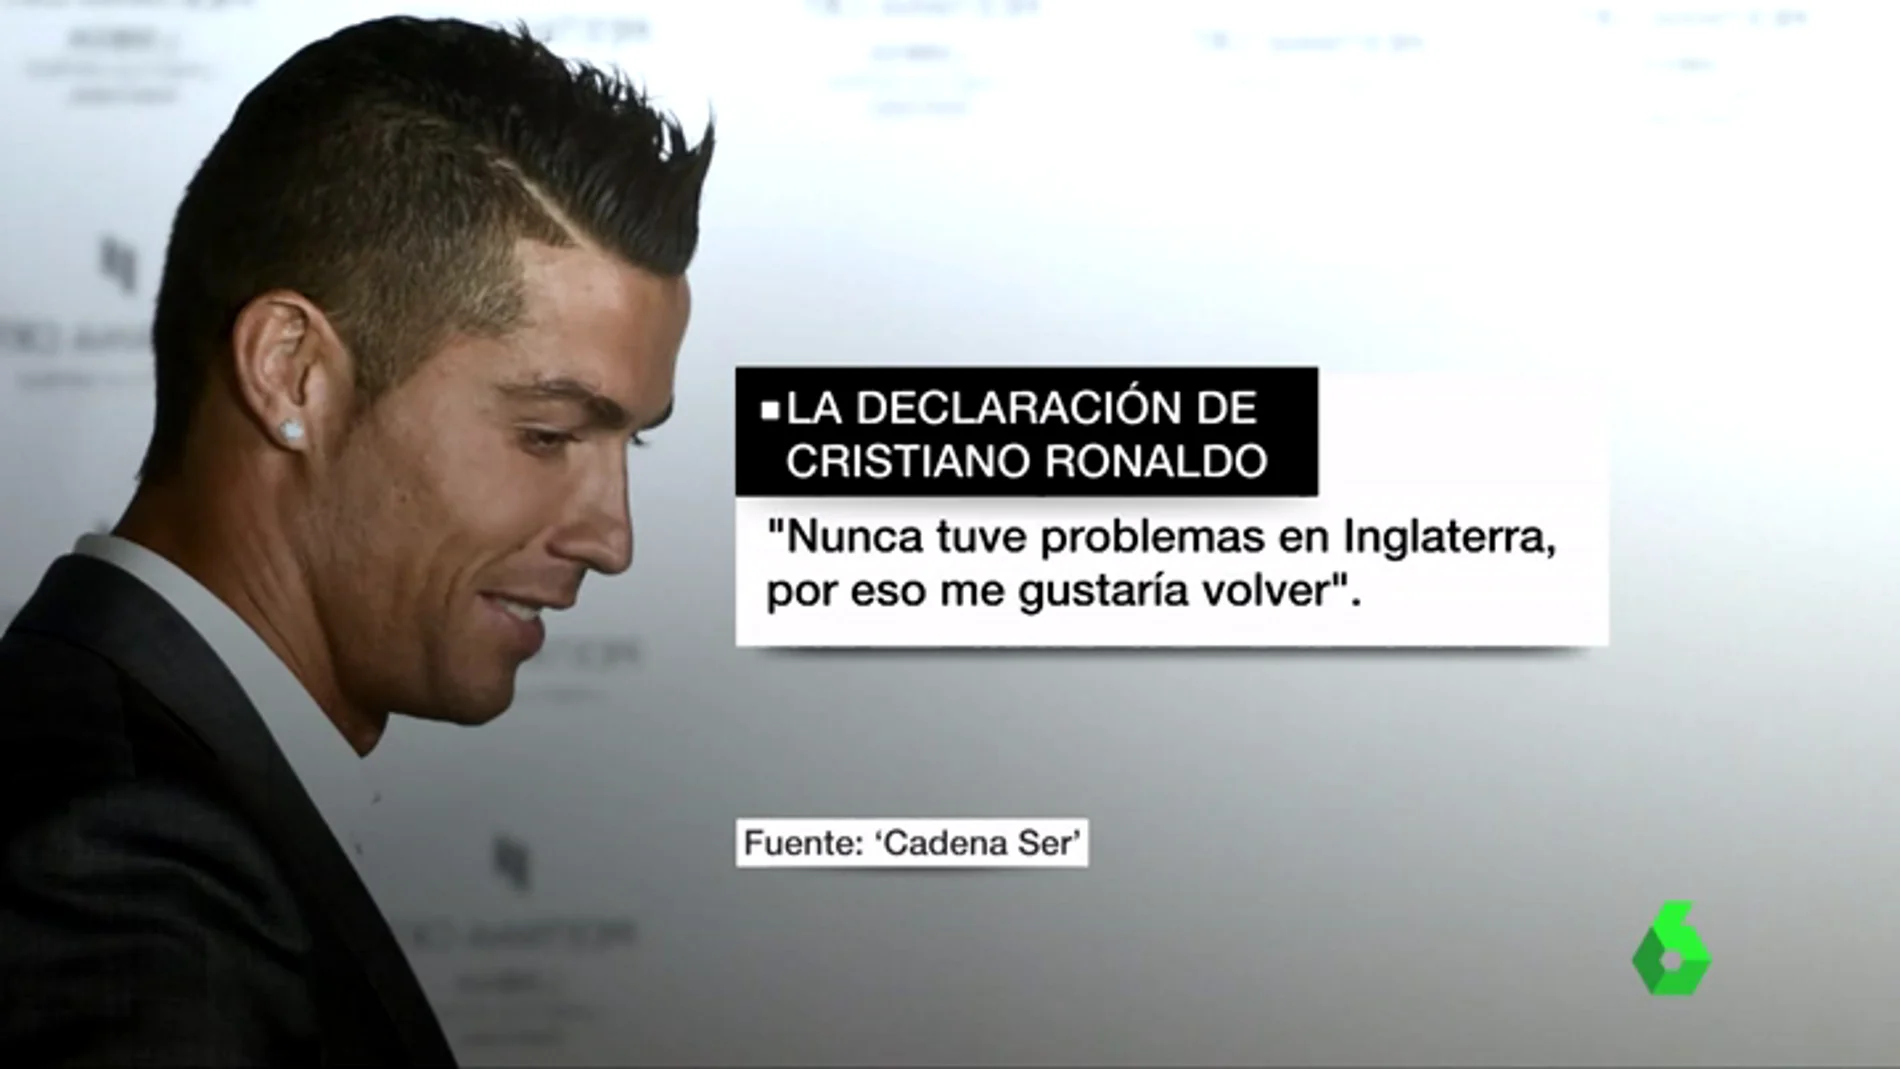 Declaración completa de Cristiano Ronaldo: "Nunca tuve problemas en Inglaterra, por eso me gustaría volver"